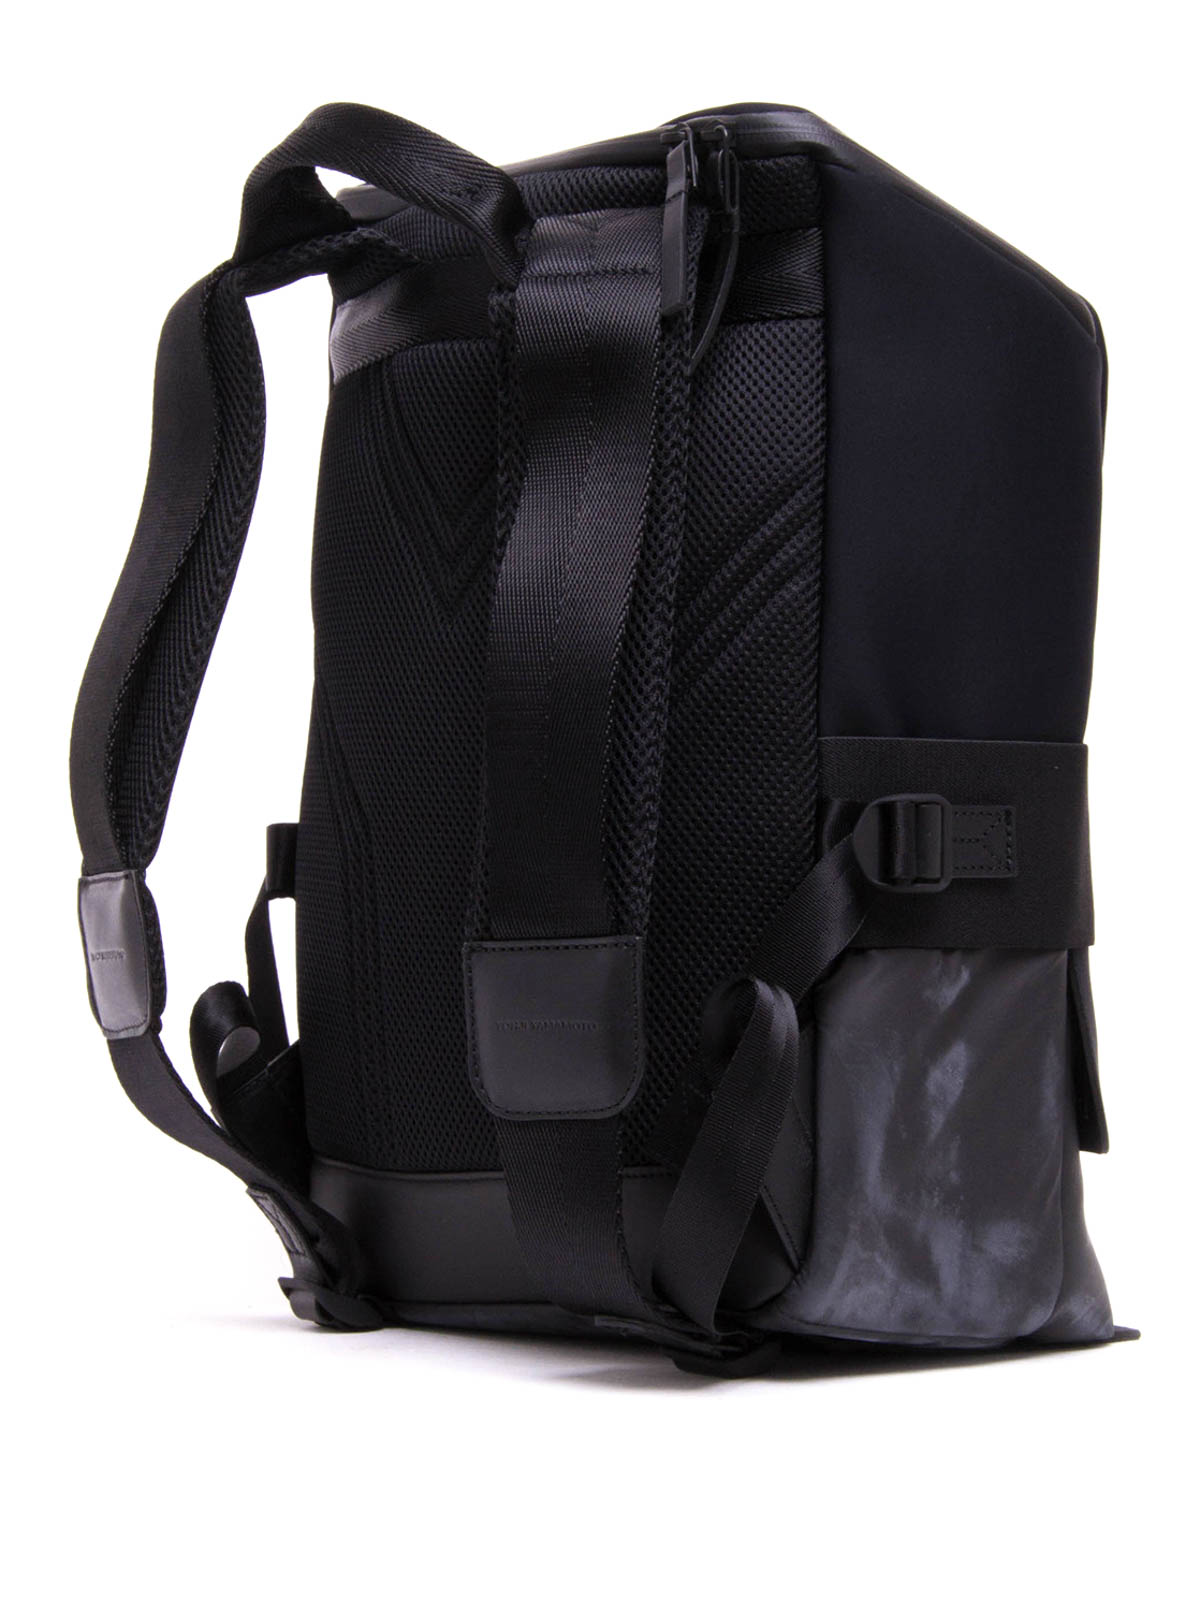 Y-3 Qasa Small Backpack バックパック